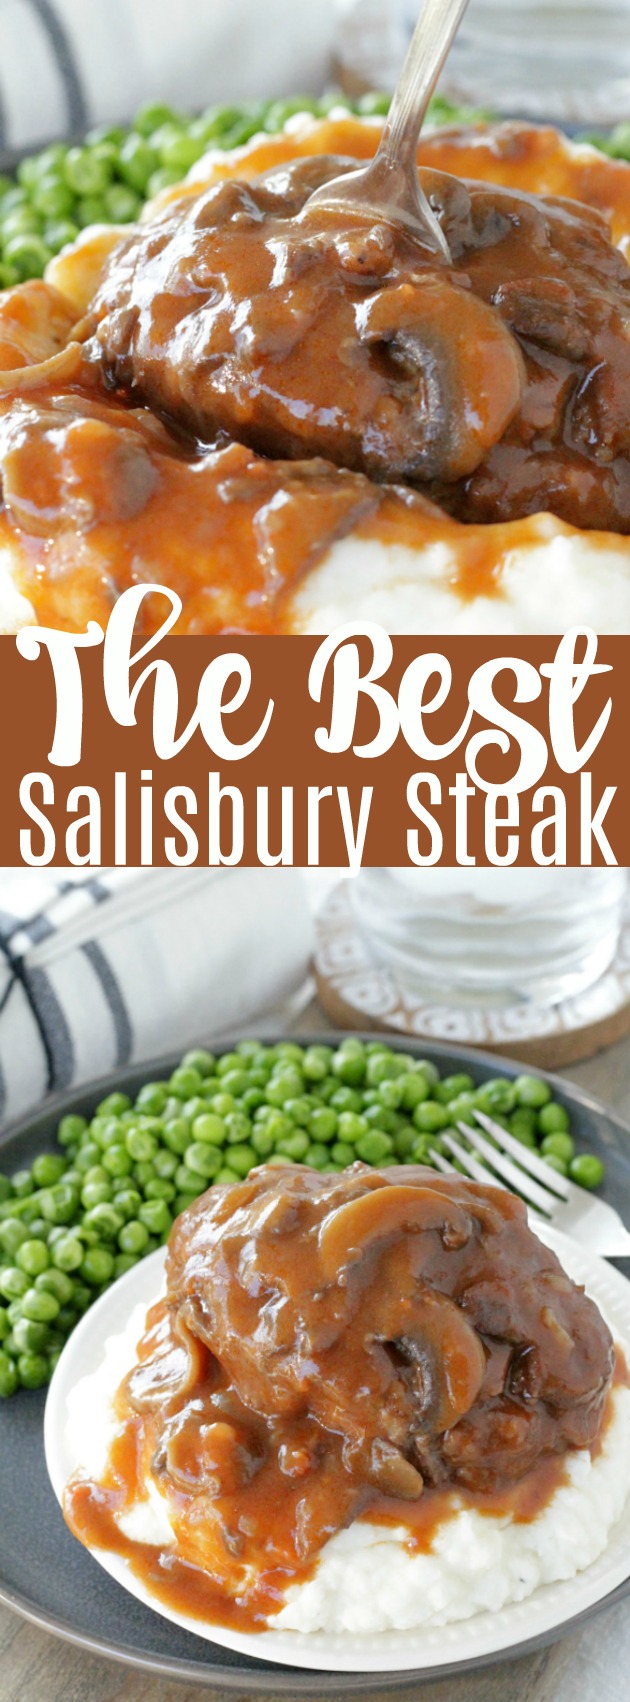 The Best Salisbury Steak